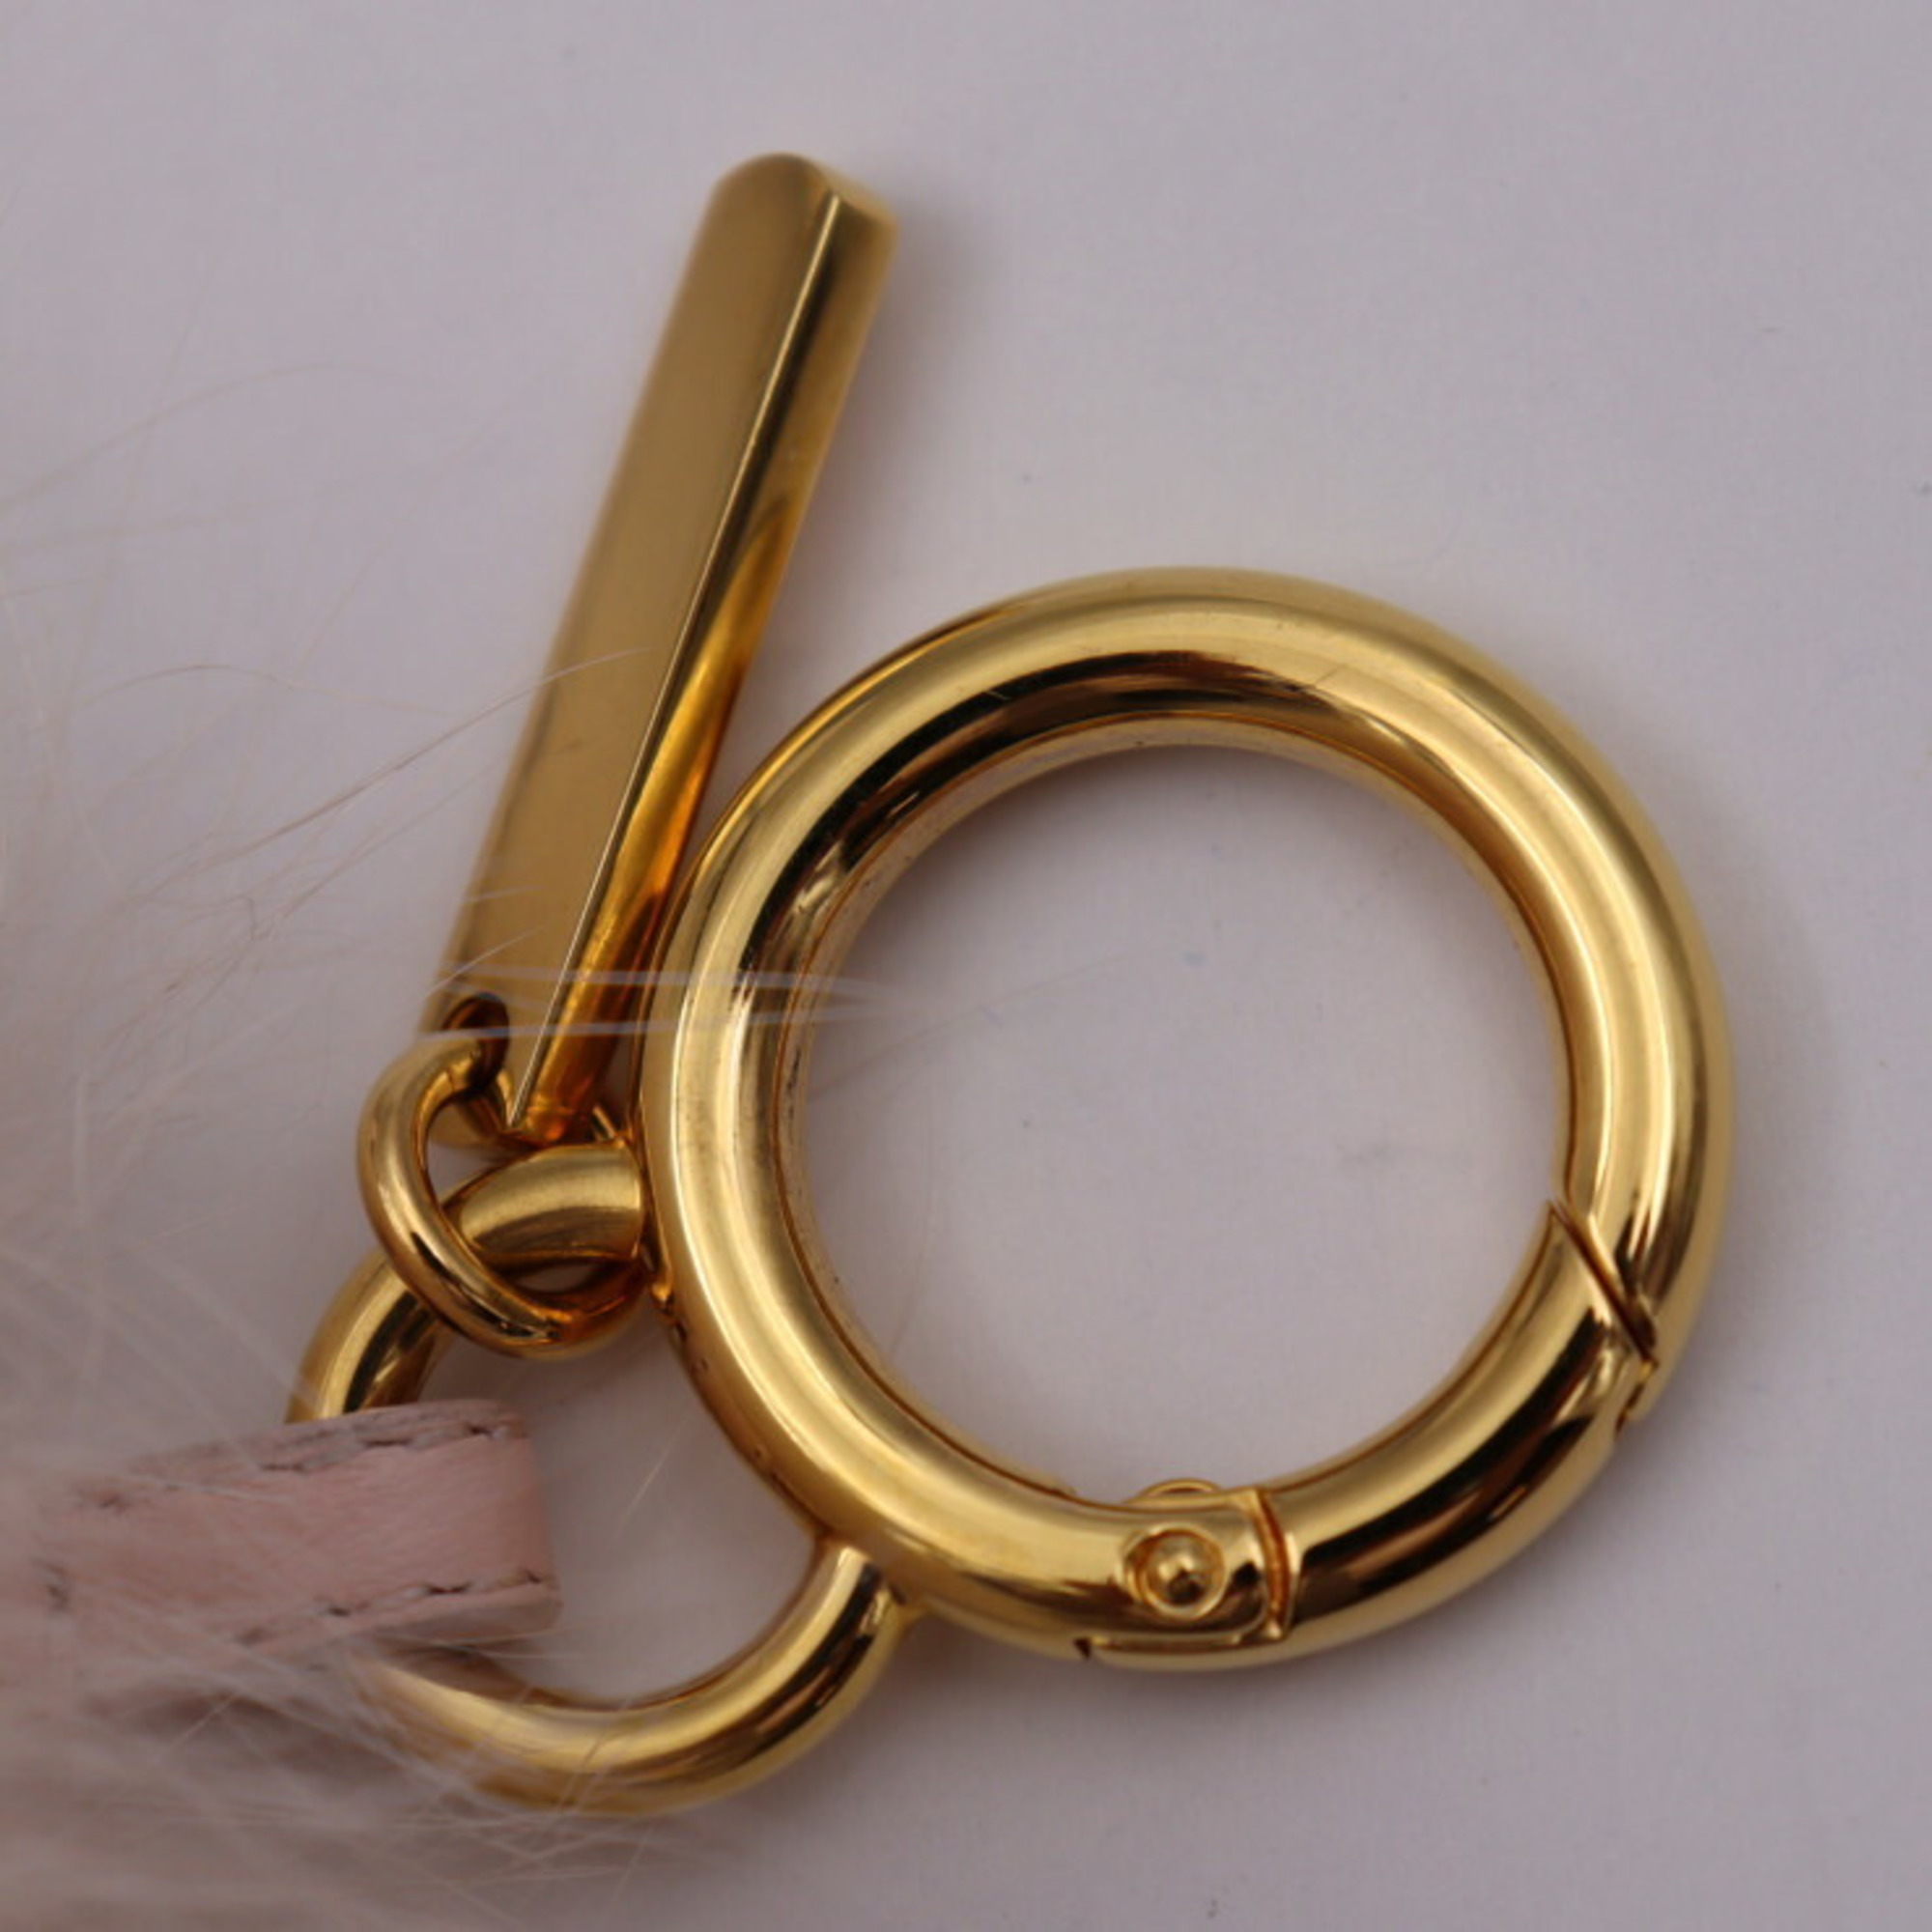 FENDI Fendi Monster Bag Bugs Keychain 7AR688 Fur Metal Leather Pink Series Gold Hardware Bugseye Key Ring Charm